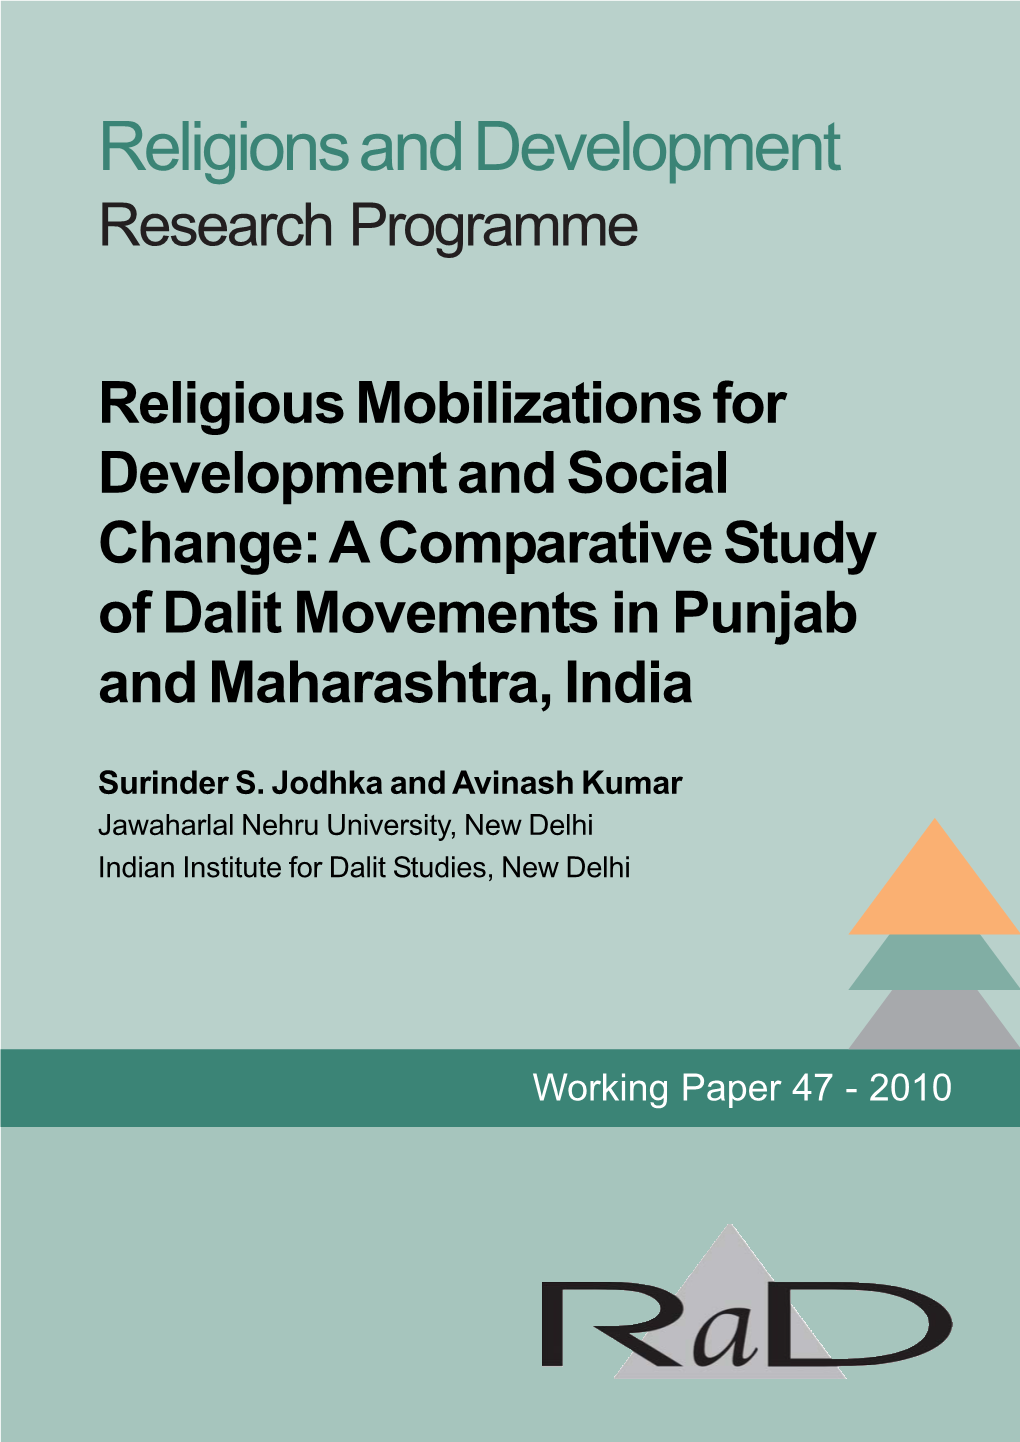 A Comparative Study of Dalit Movements in Punjab and Maharashtra, India